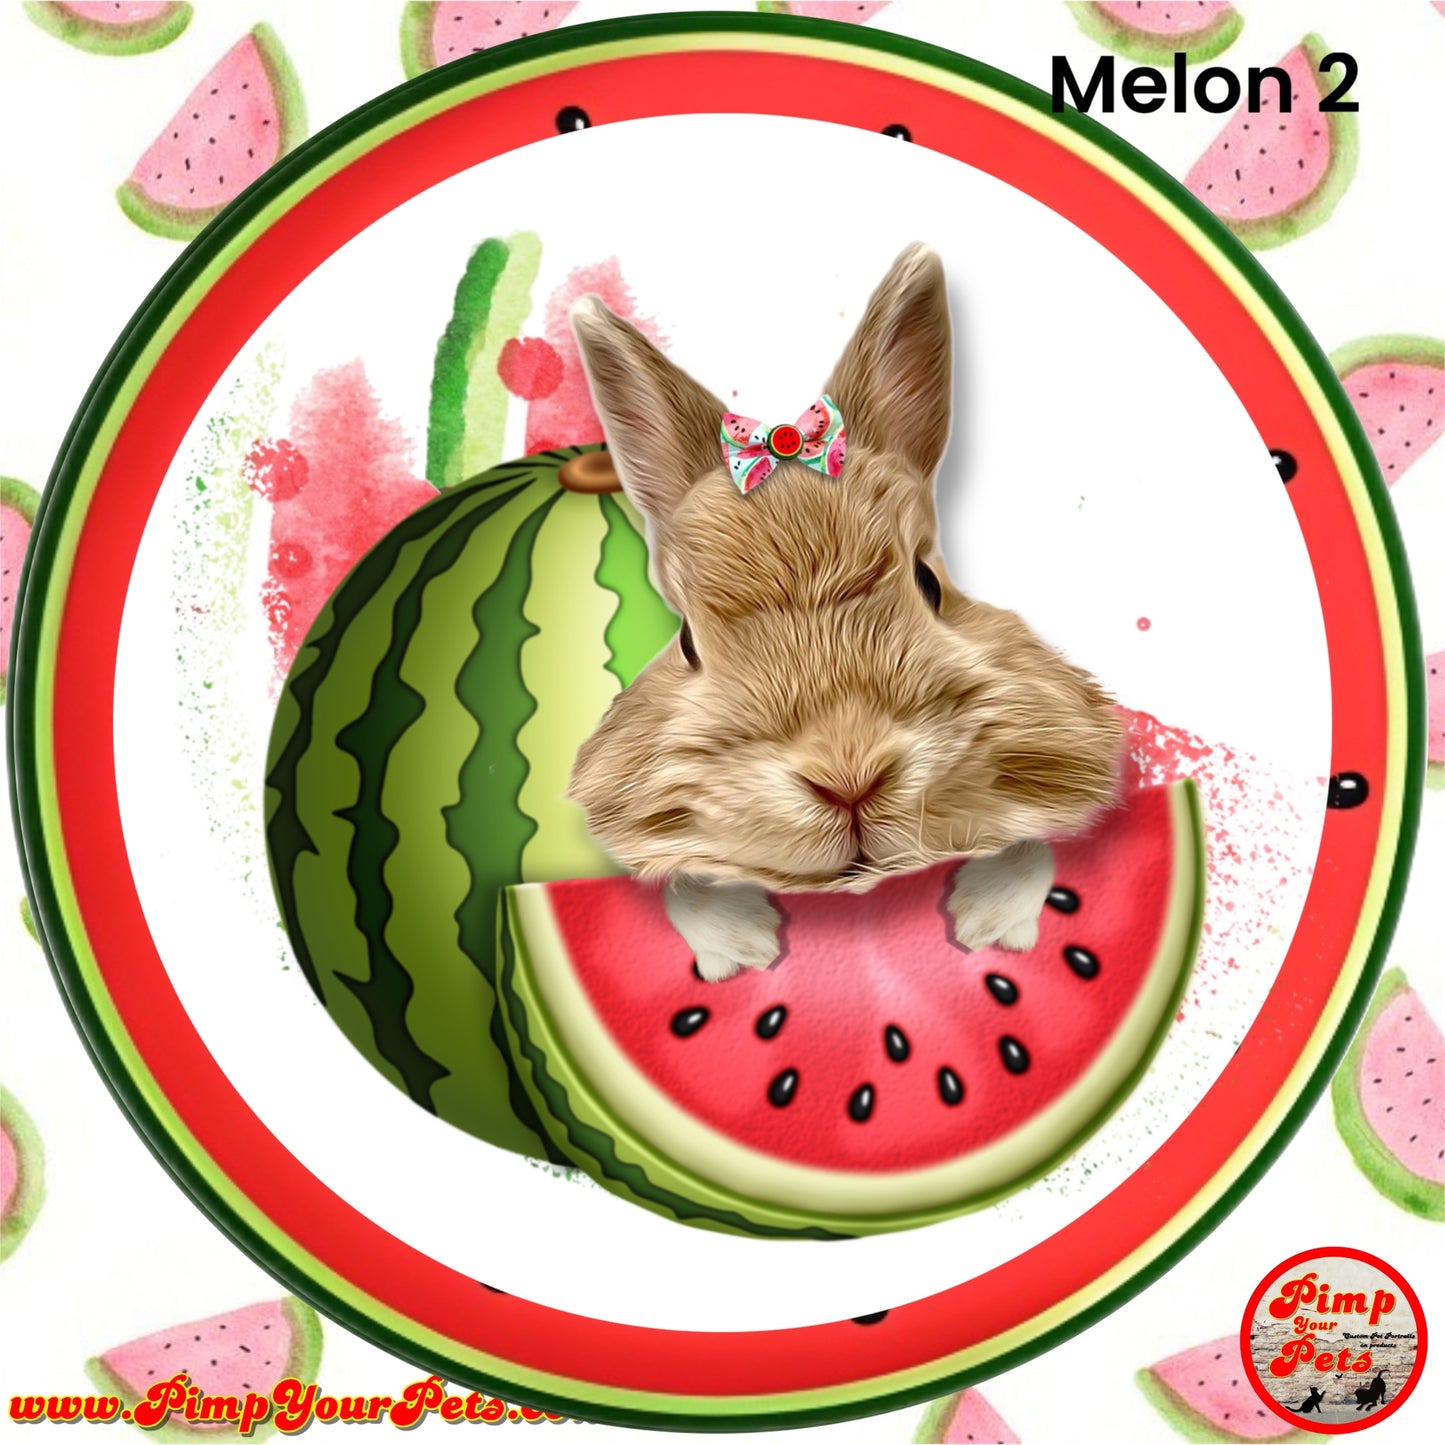 One in a Melon Edarts (Digital File)